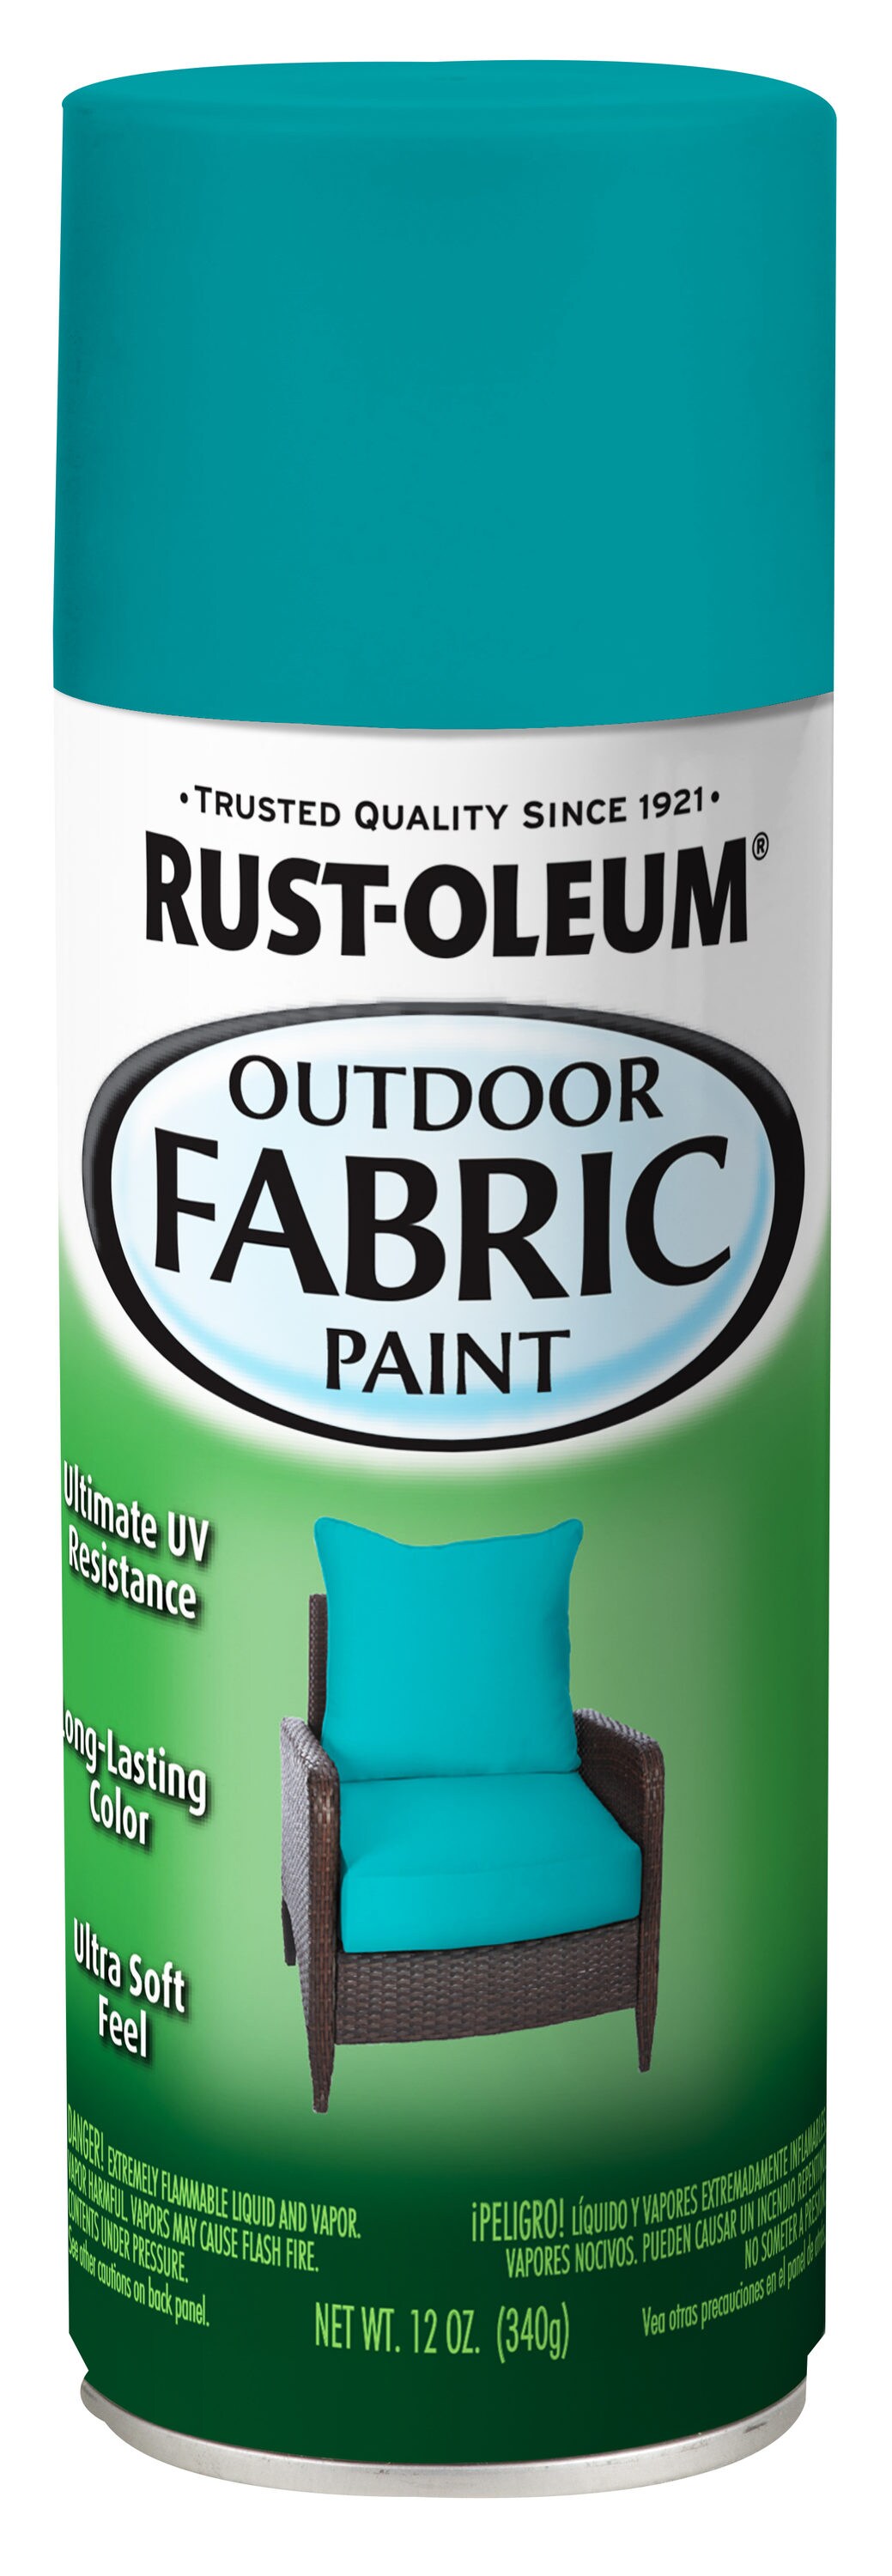 Turquoise, Rust-Oleum Universal All Surface Interior/Exterior Metallic  Spray Paint-330480, 11 oz, 6 Pack 